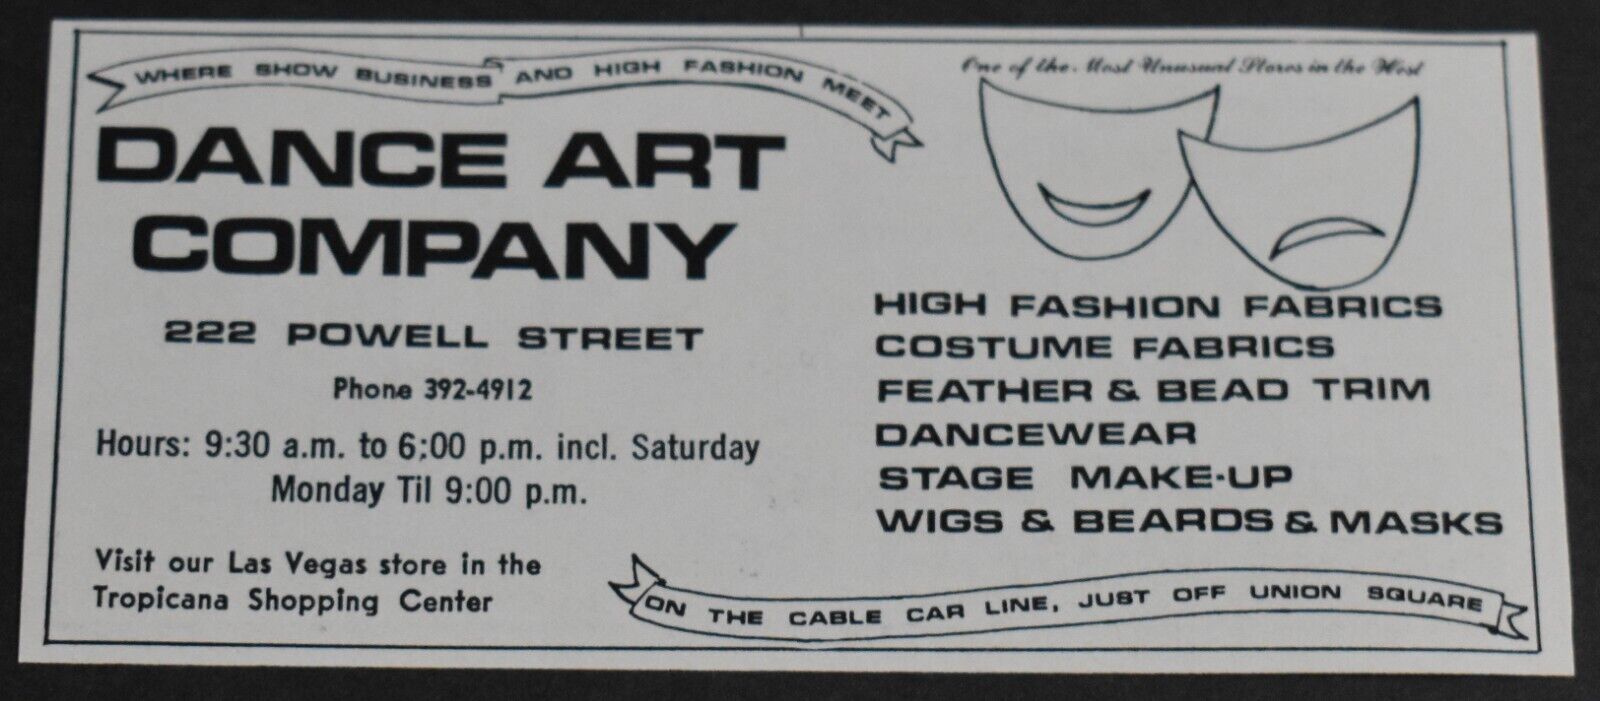 1969 Print Ad San Francisco Dance Art Company 222 Powell St Fashion Fabrics